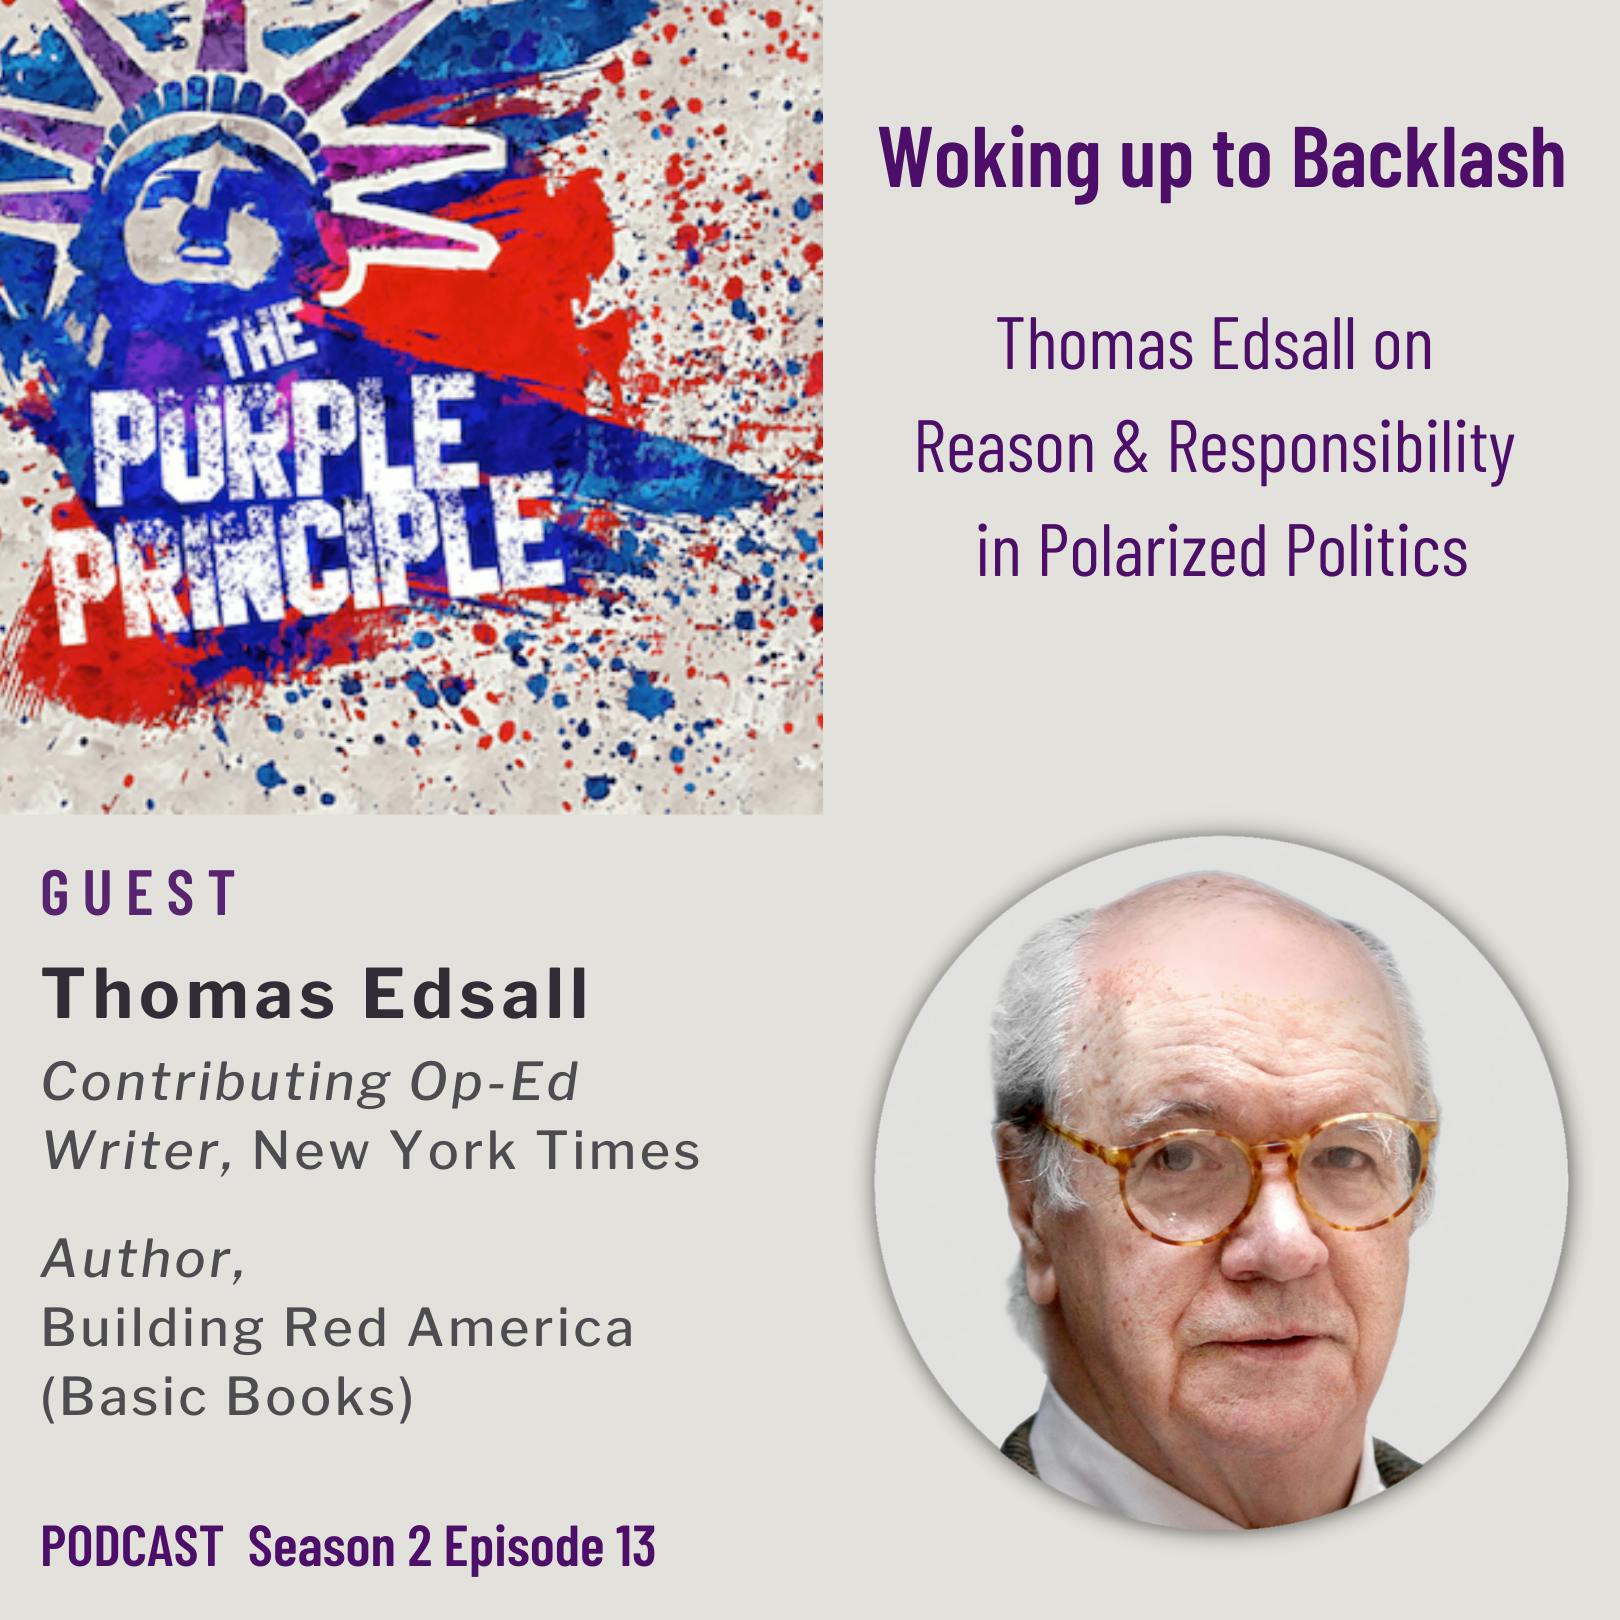 Woking up to Backlash: New York Times Contributing Writer Thomas Edsall on Reason & Responsibility in Polarized Politics